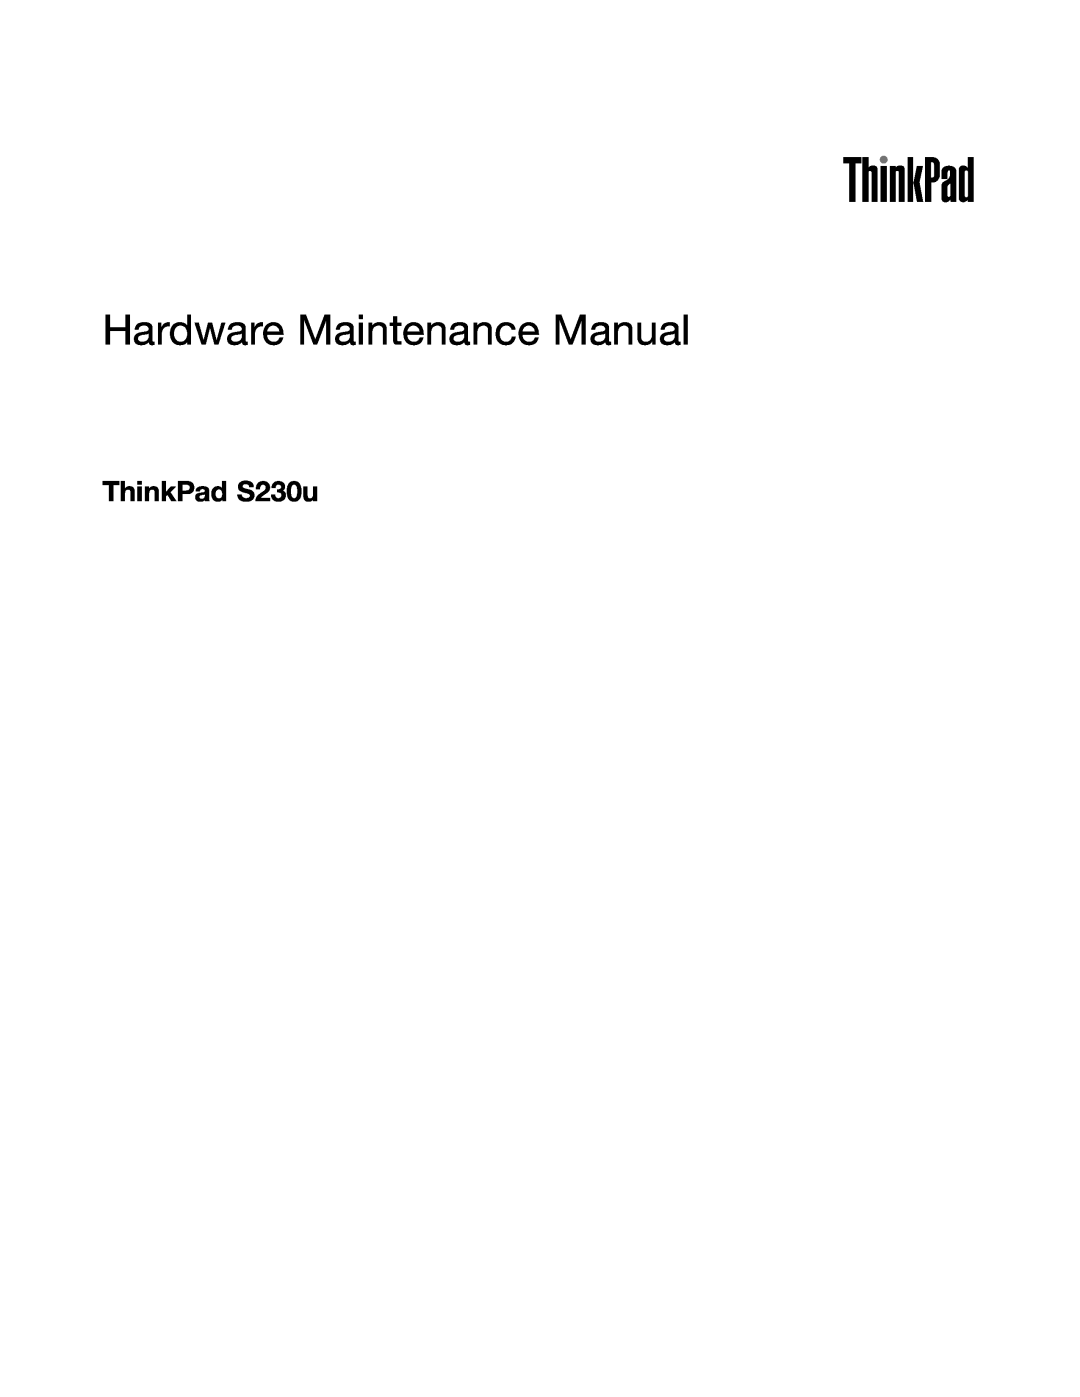 Lenovo 33472YU, S230U manual ThinkPad S230u, Hardware Maintenance Manual 